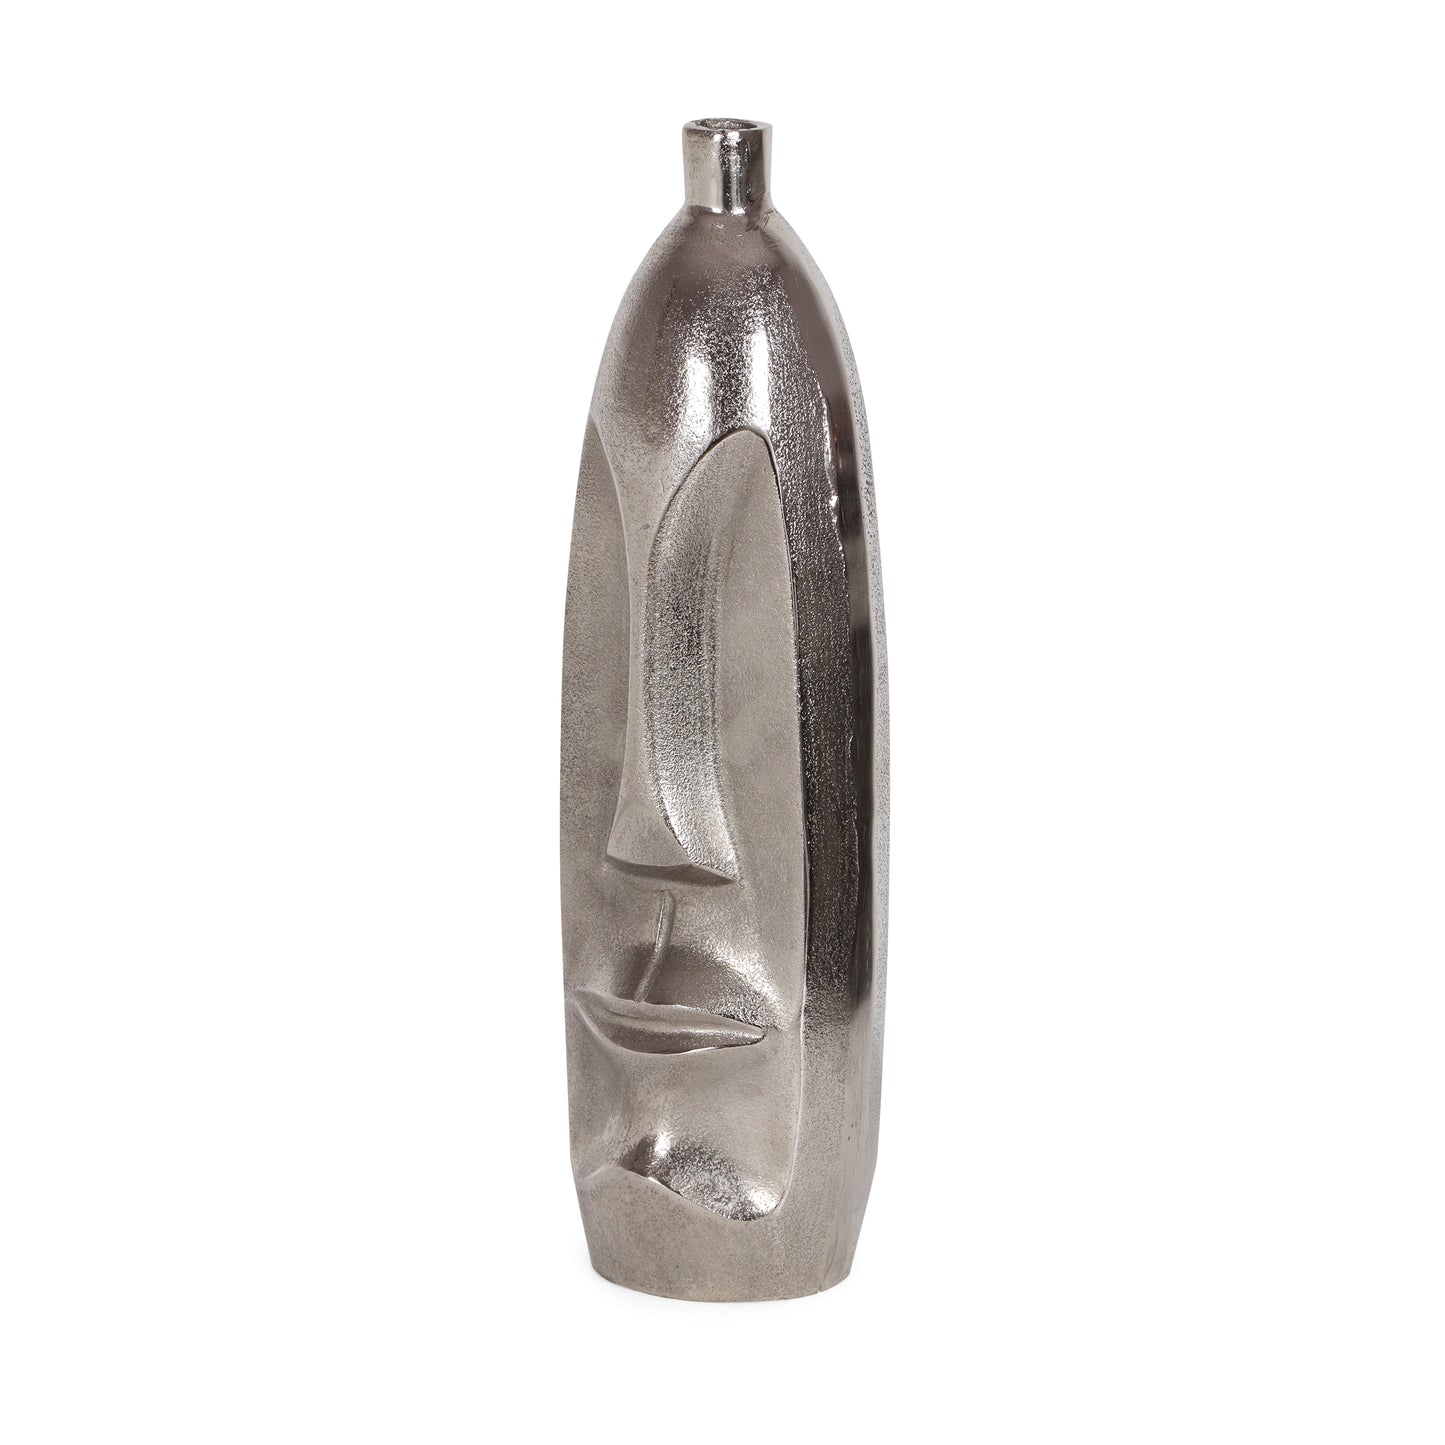 Judland Modern Handmade Aluminum Bottle Vase, Raw Nickel